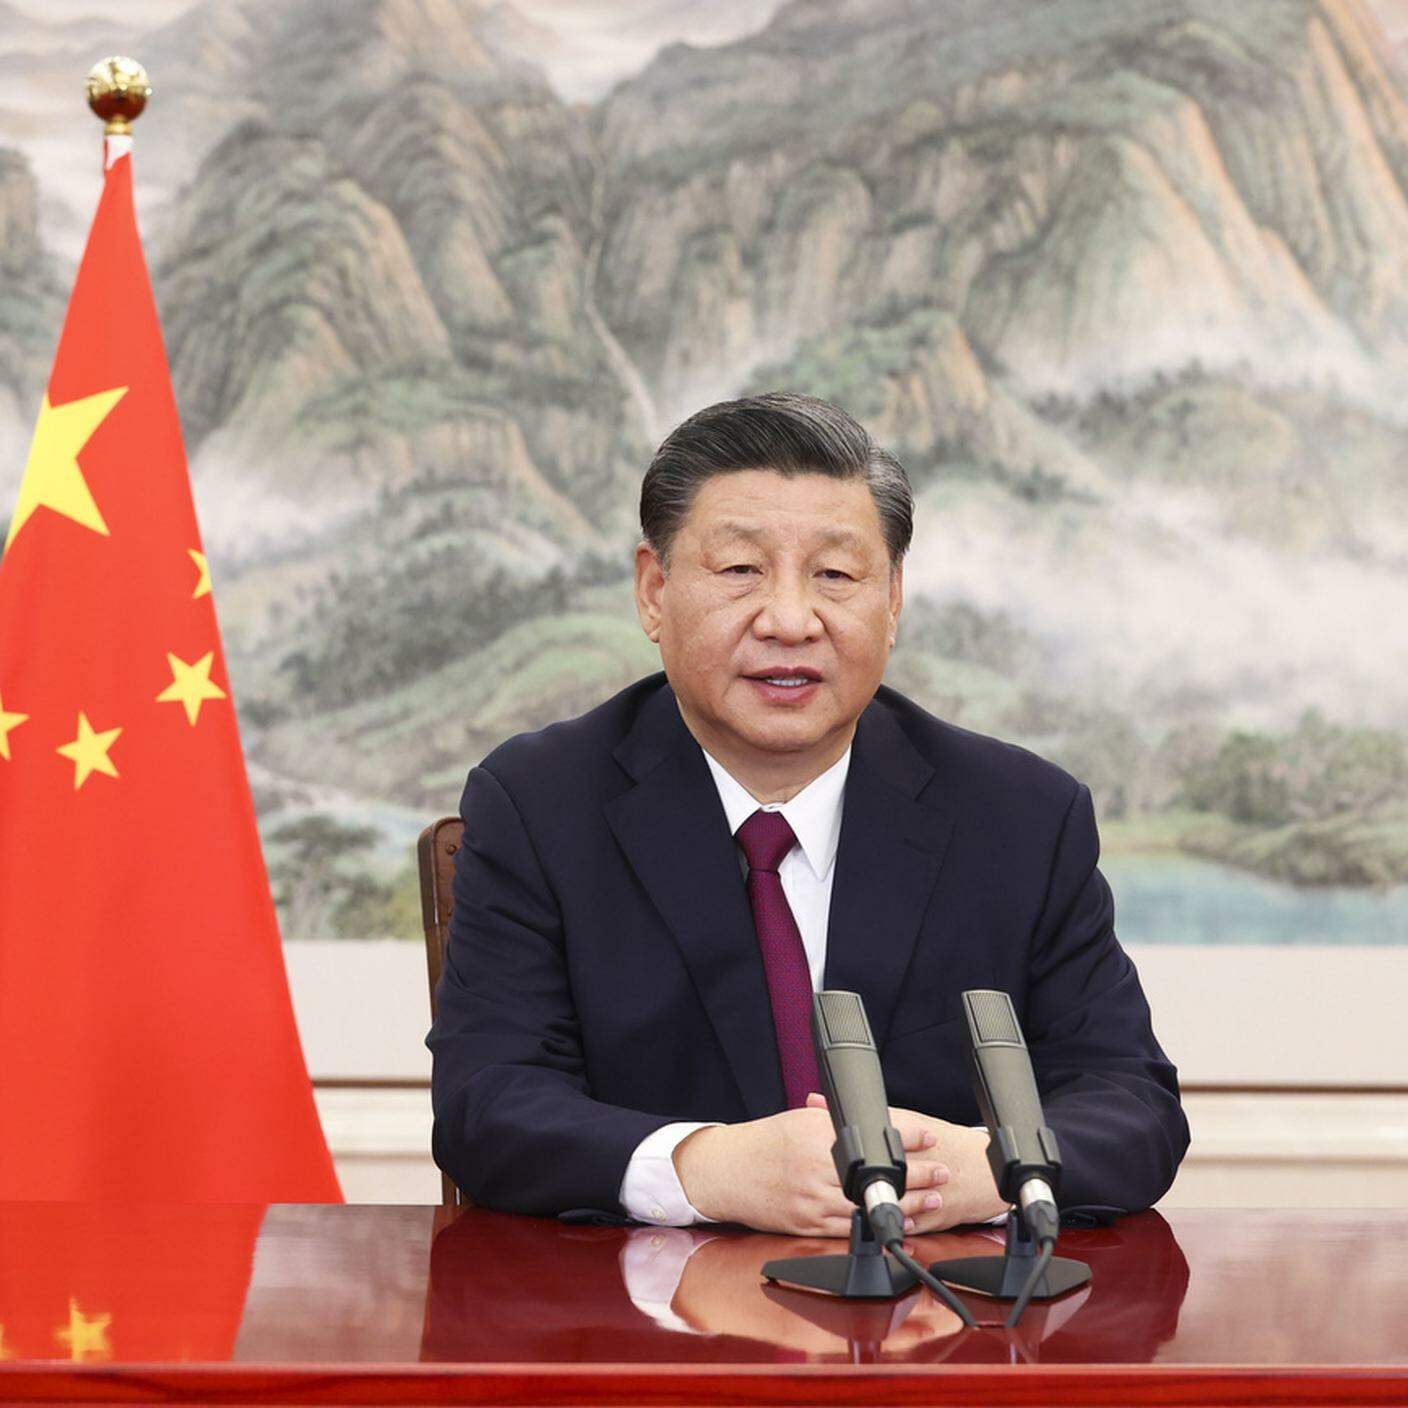 Xi Jinping e la Cina zero-Covid